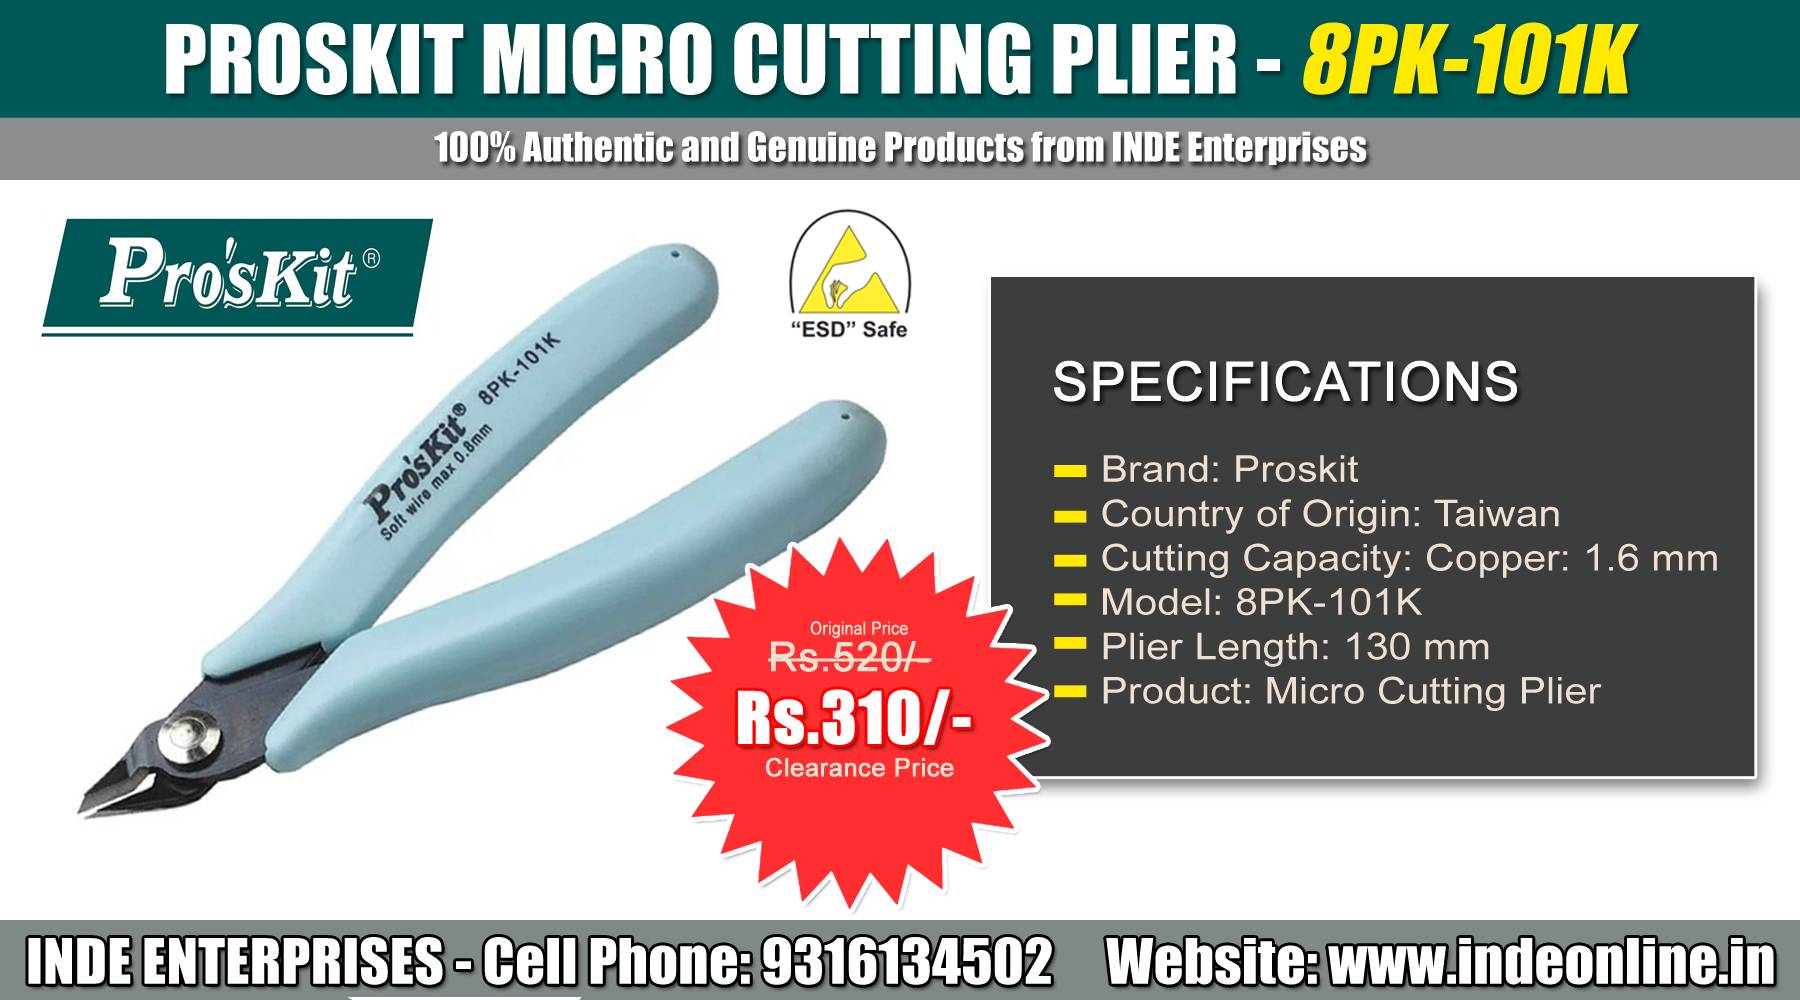 Proskit Micro Cutting Plier 8PK-101K Price Rs.310/-